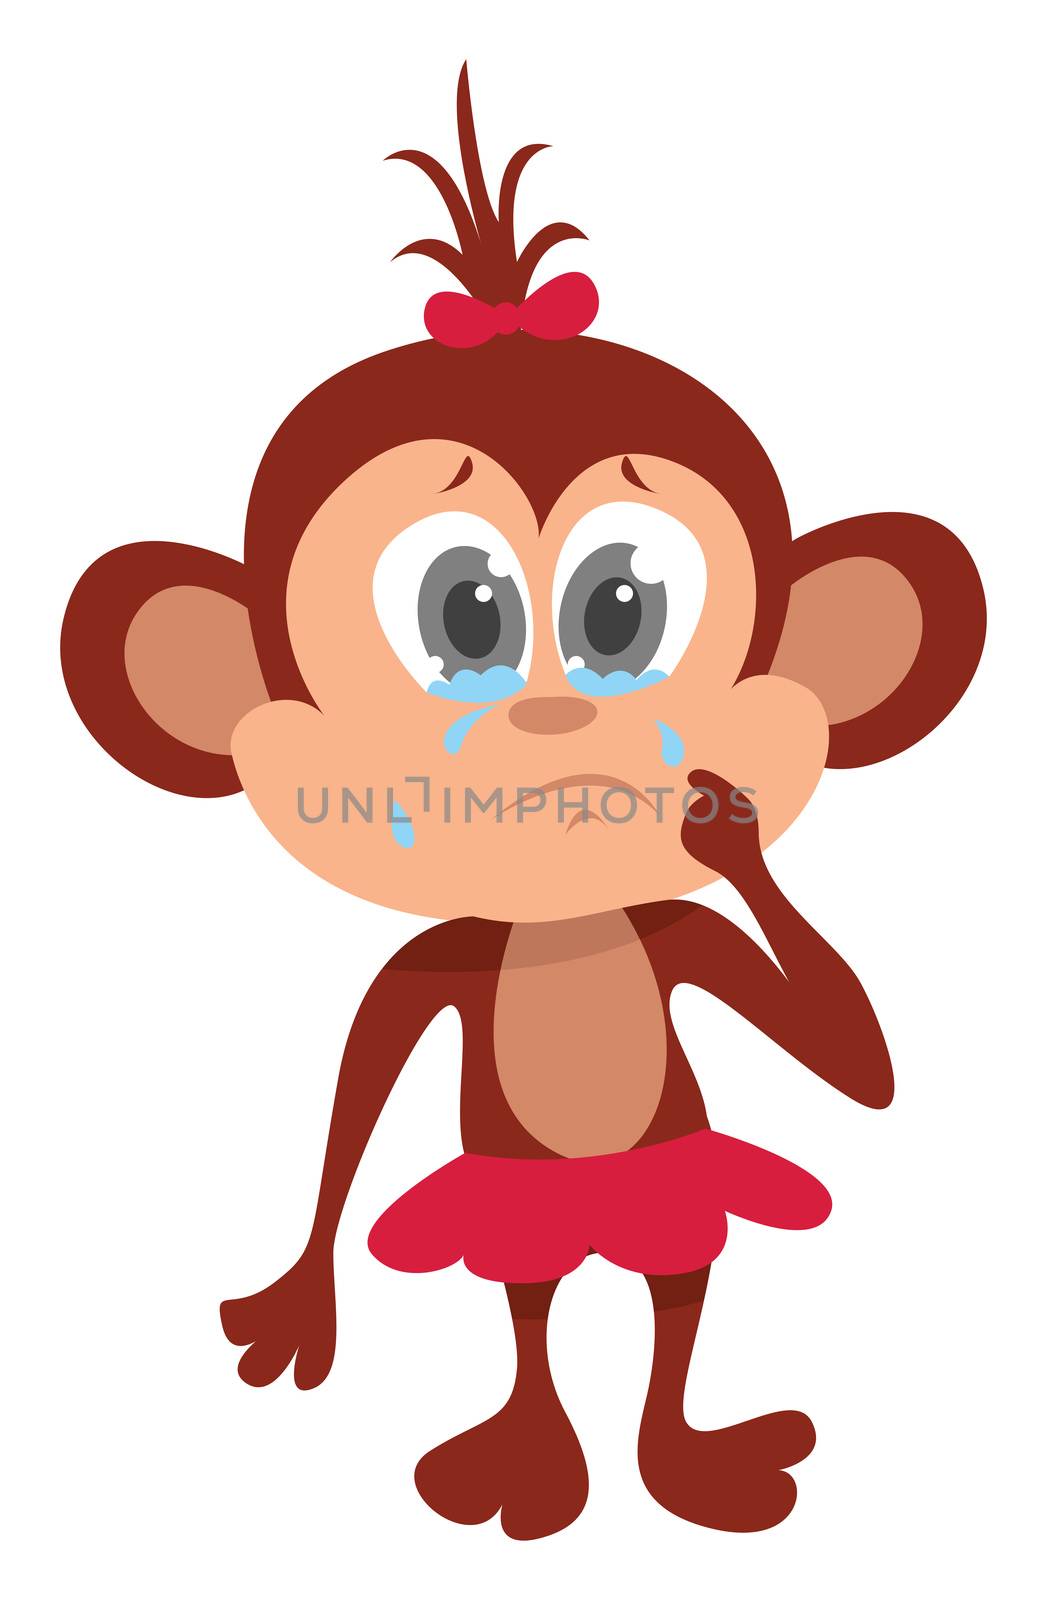 Sad little monkey , illustration, vector on white background